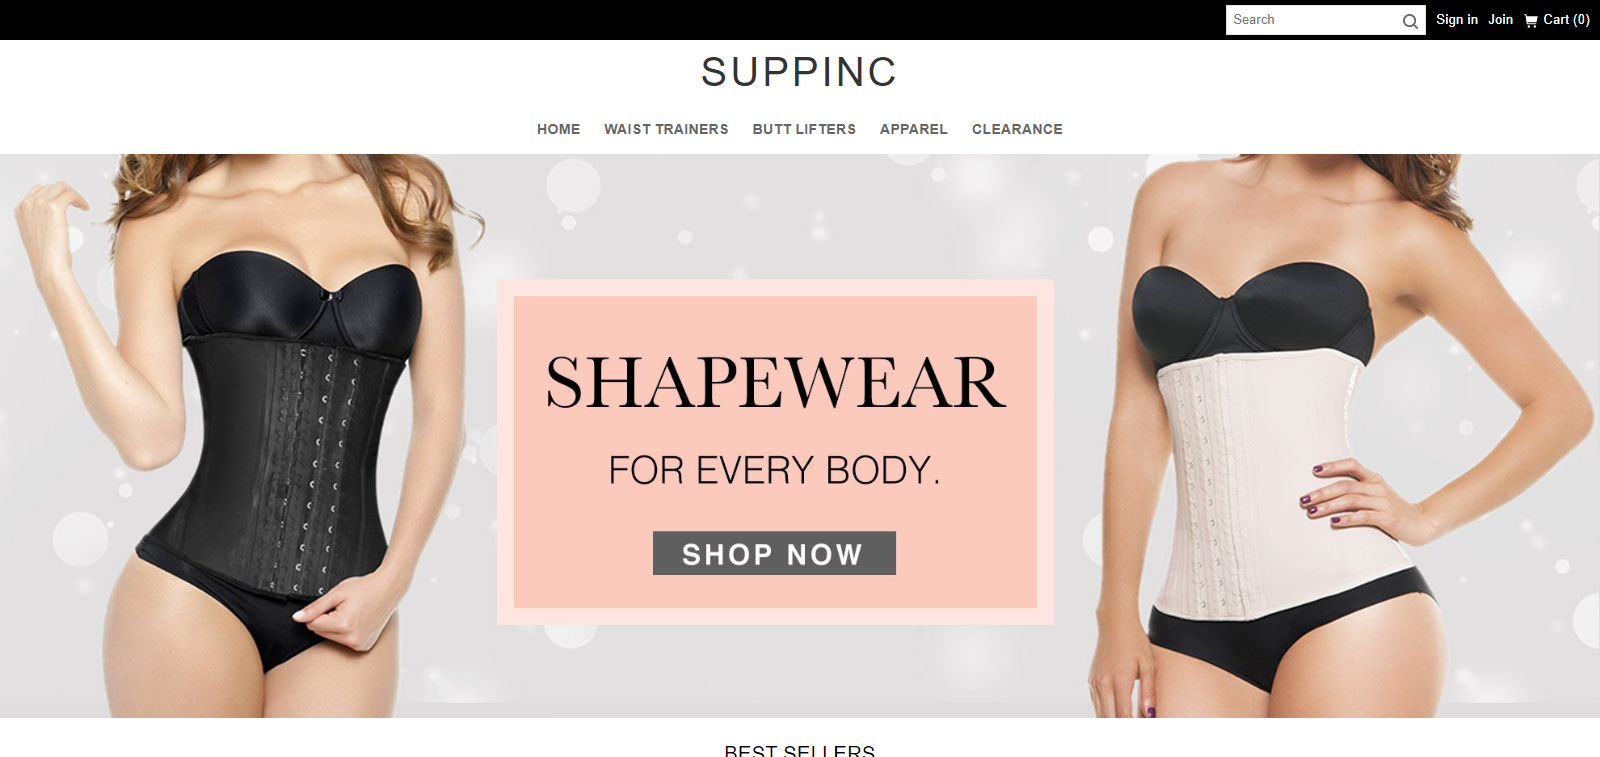 Suppinc Homepage Image